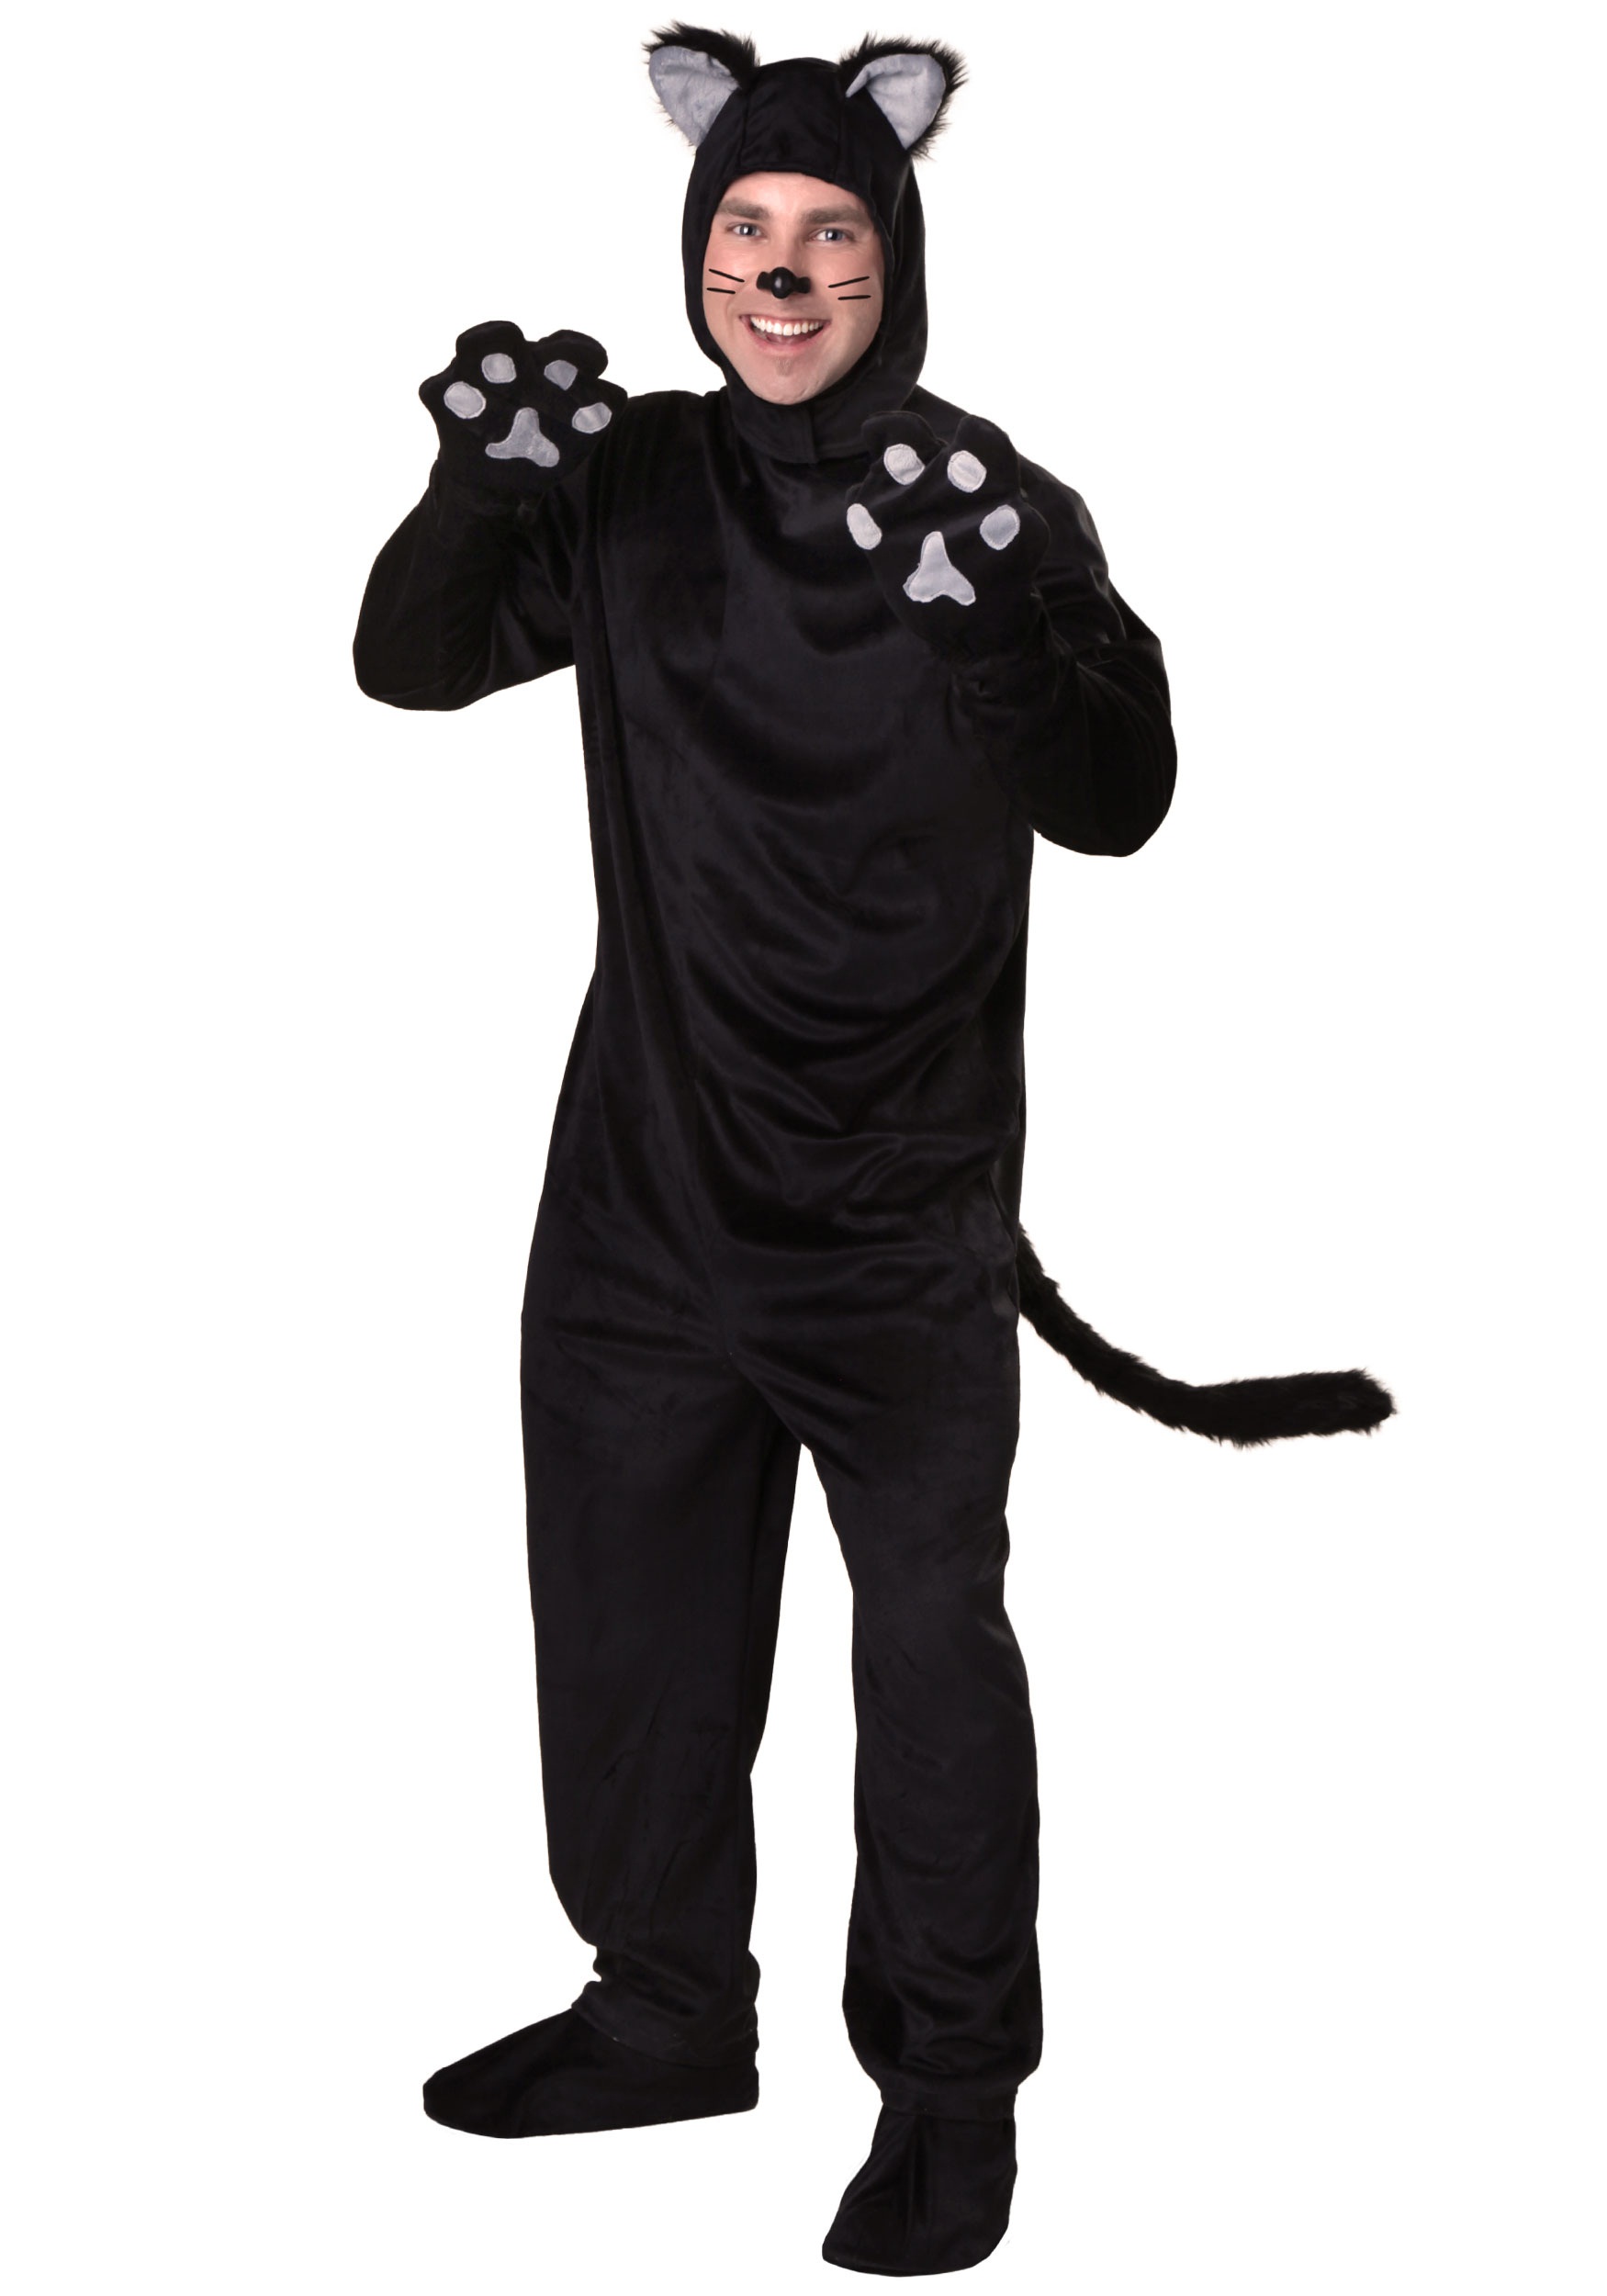 Photos - Fancy Dress FUN Costumes Black Cat Adult Costume | Cat Costumes Black/Gray FUN1607